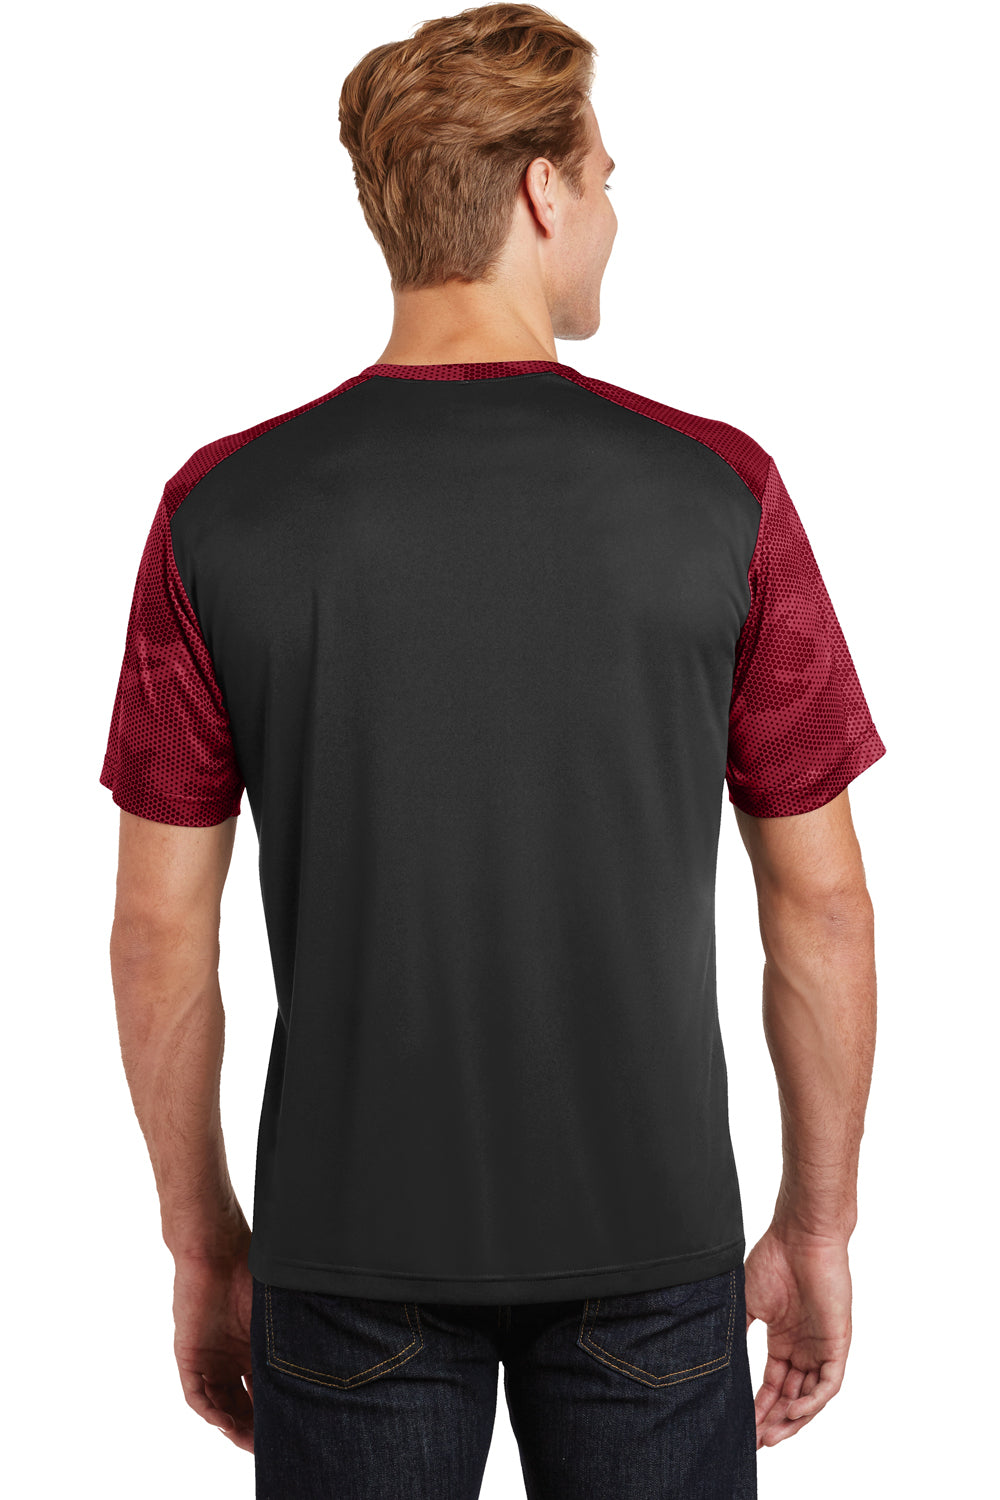 Sport-Tek ST371 Mens CamoHex Moisture Wicking Short Sleeve Crewneck T-Shirt Black/Red Back